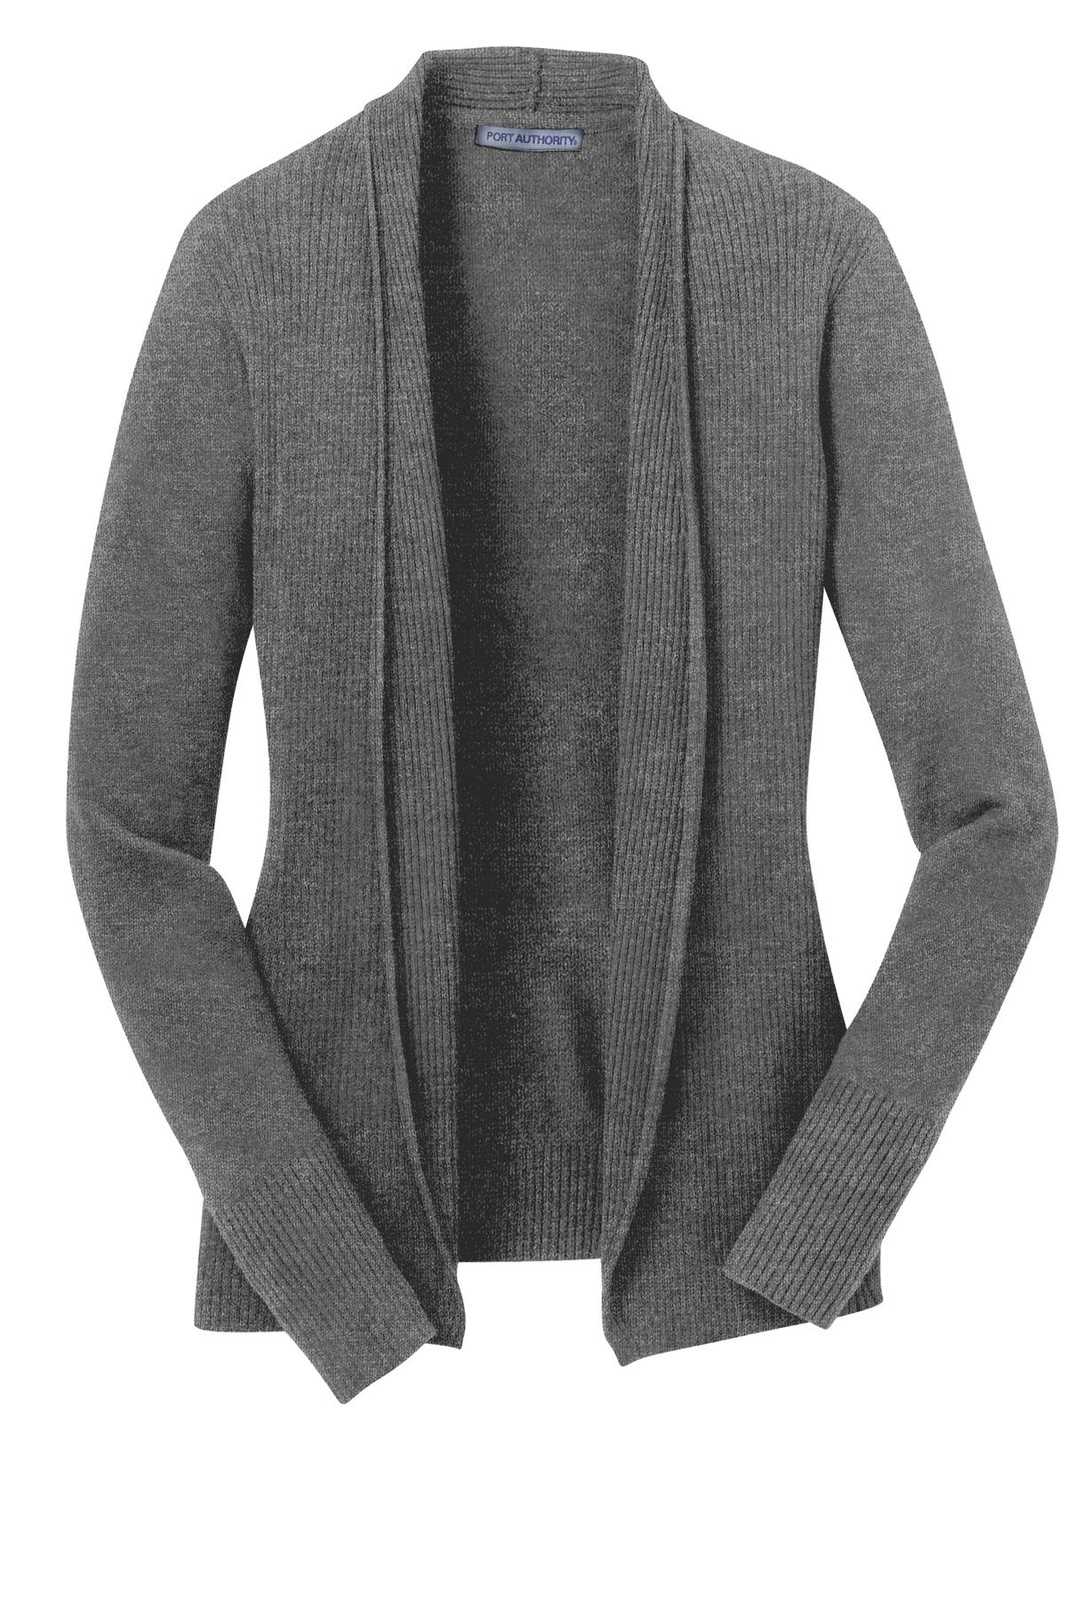 Port Authority LSW289 Ladies Open Front Cardigan Sweater - Medium Heather Gray - HIT a Double - 5